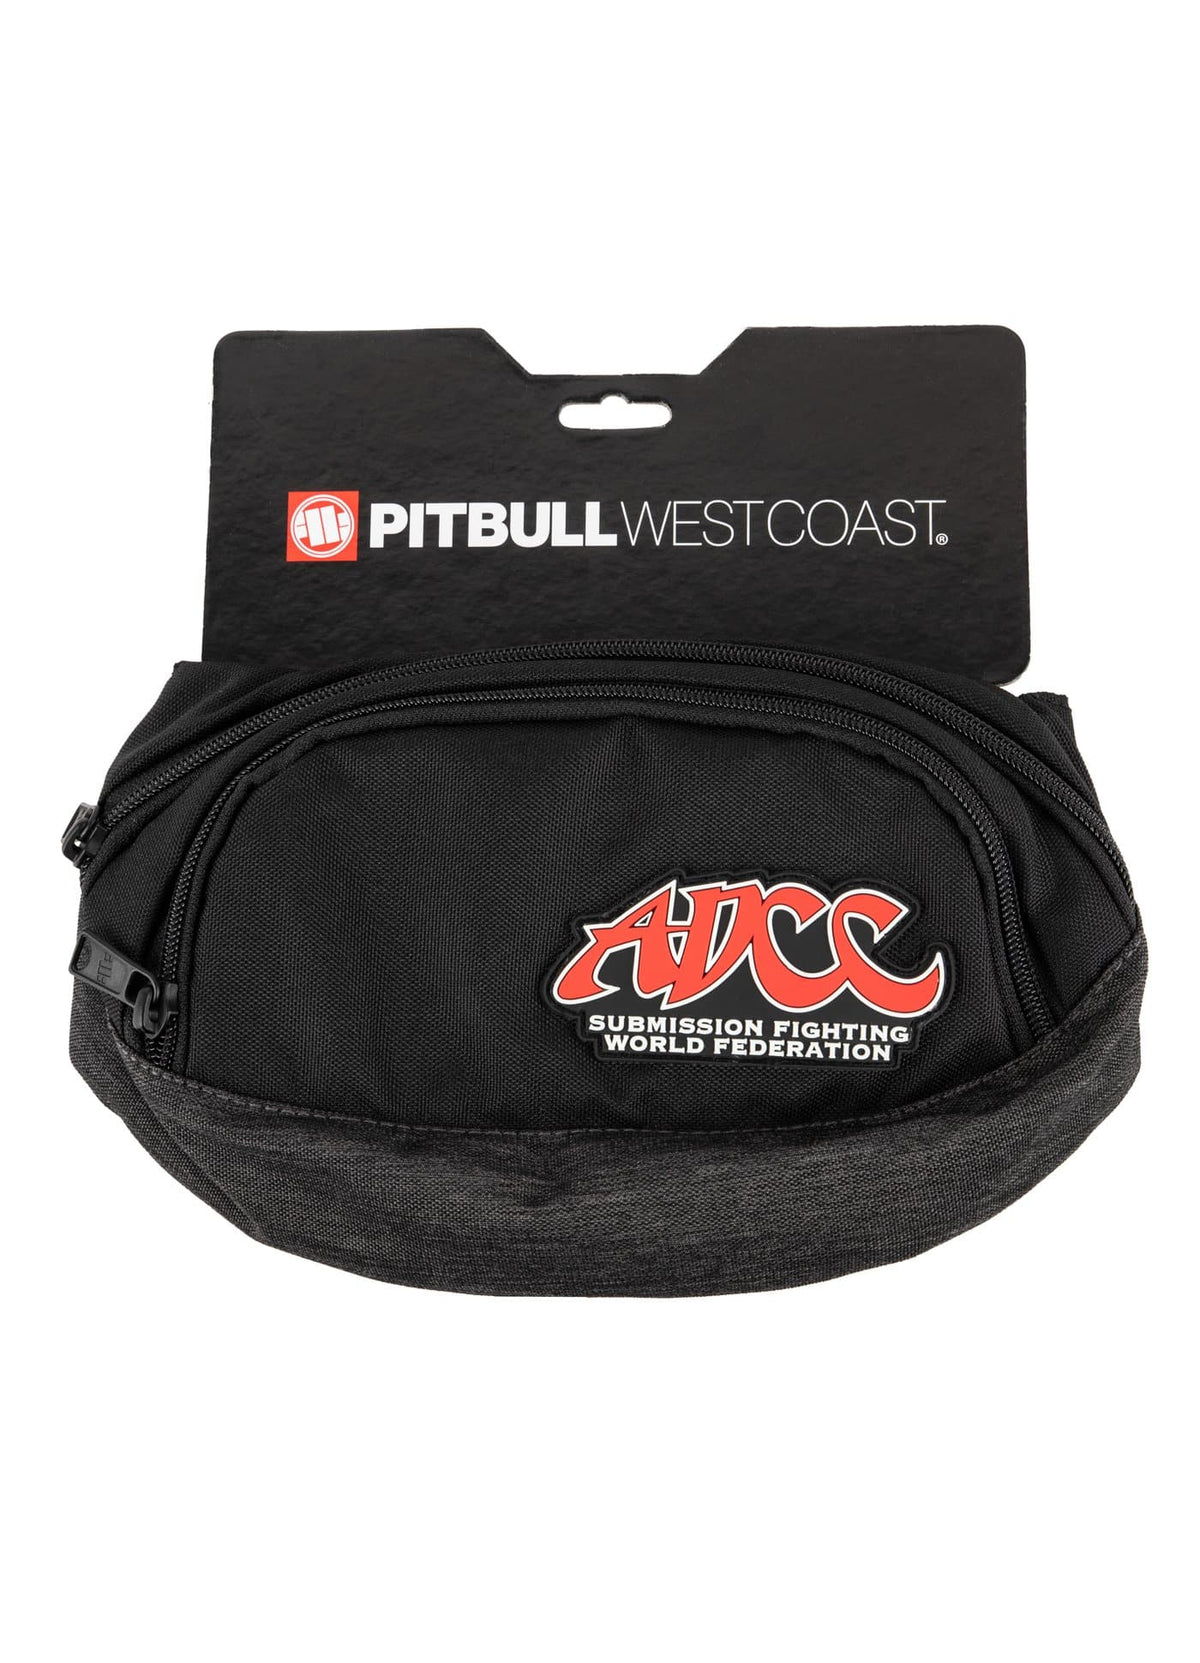 Waistbag ADCC 2021 Black - Pitbull West Coast International Store 